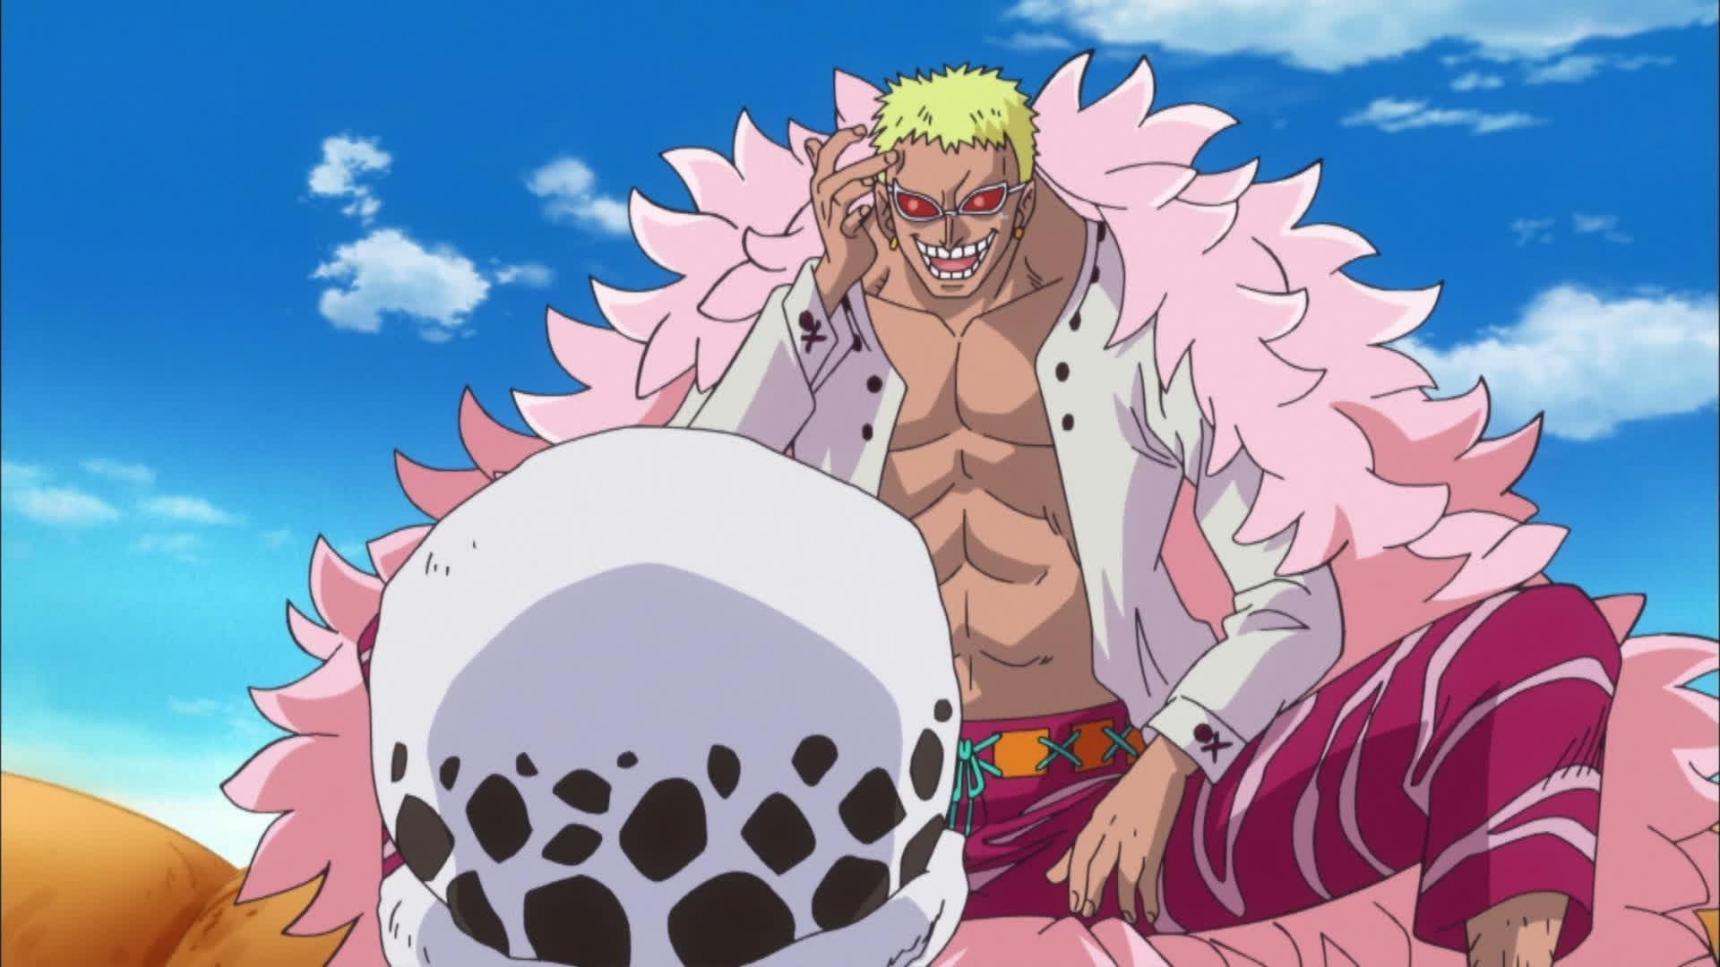 Poster del episodio 624 de One Piece online